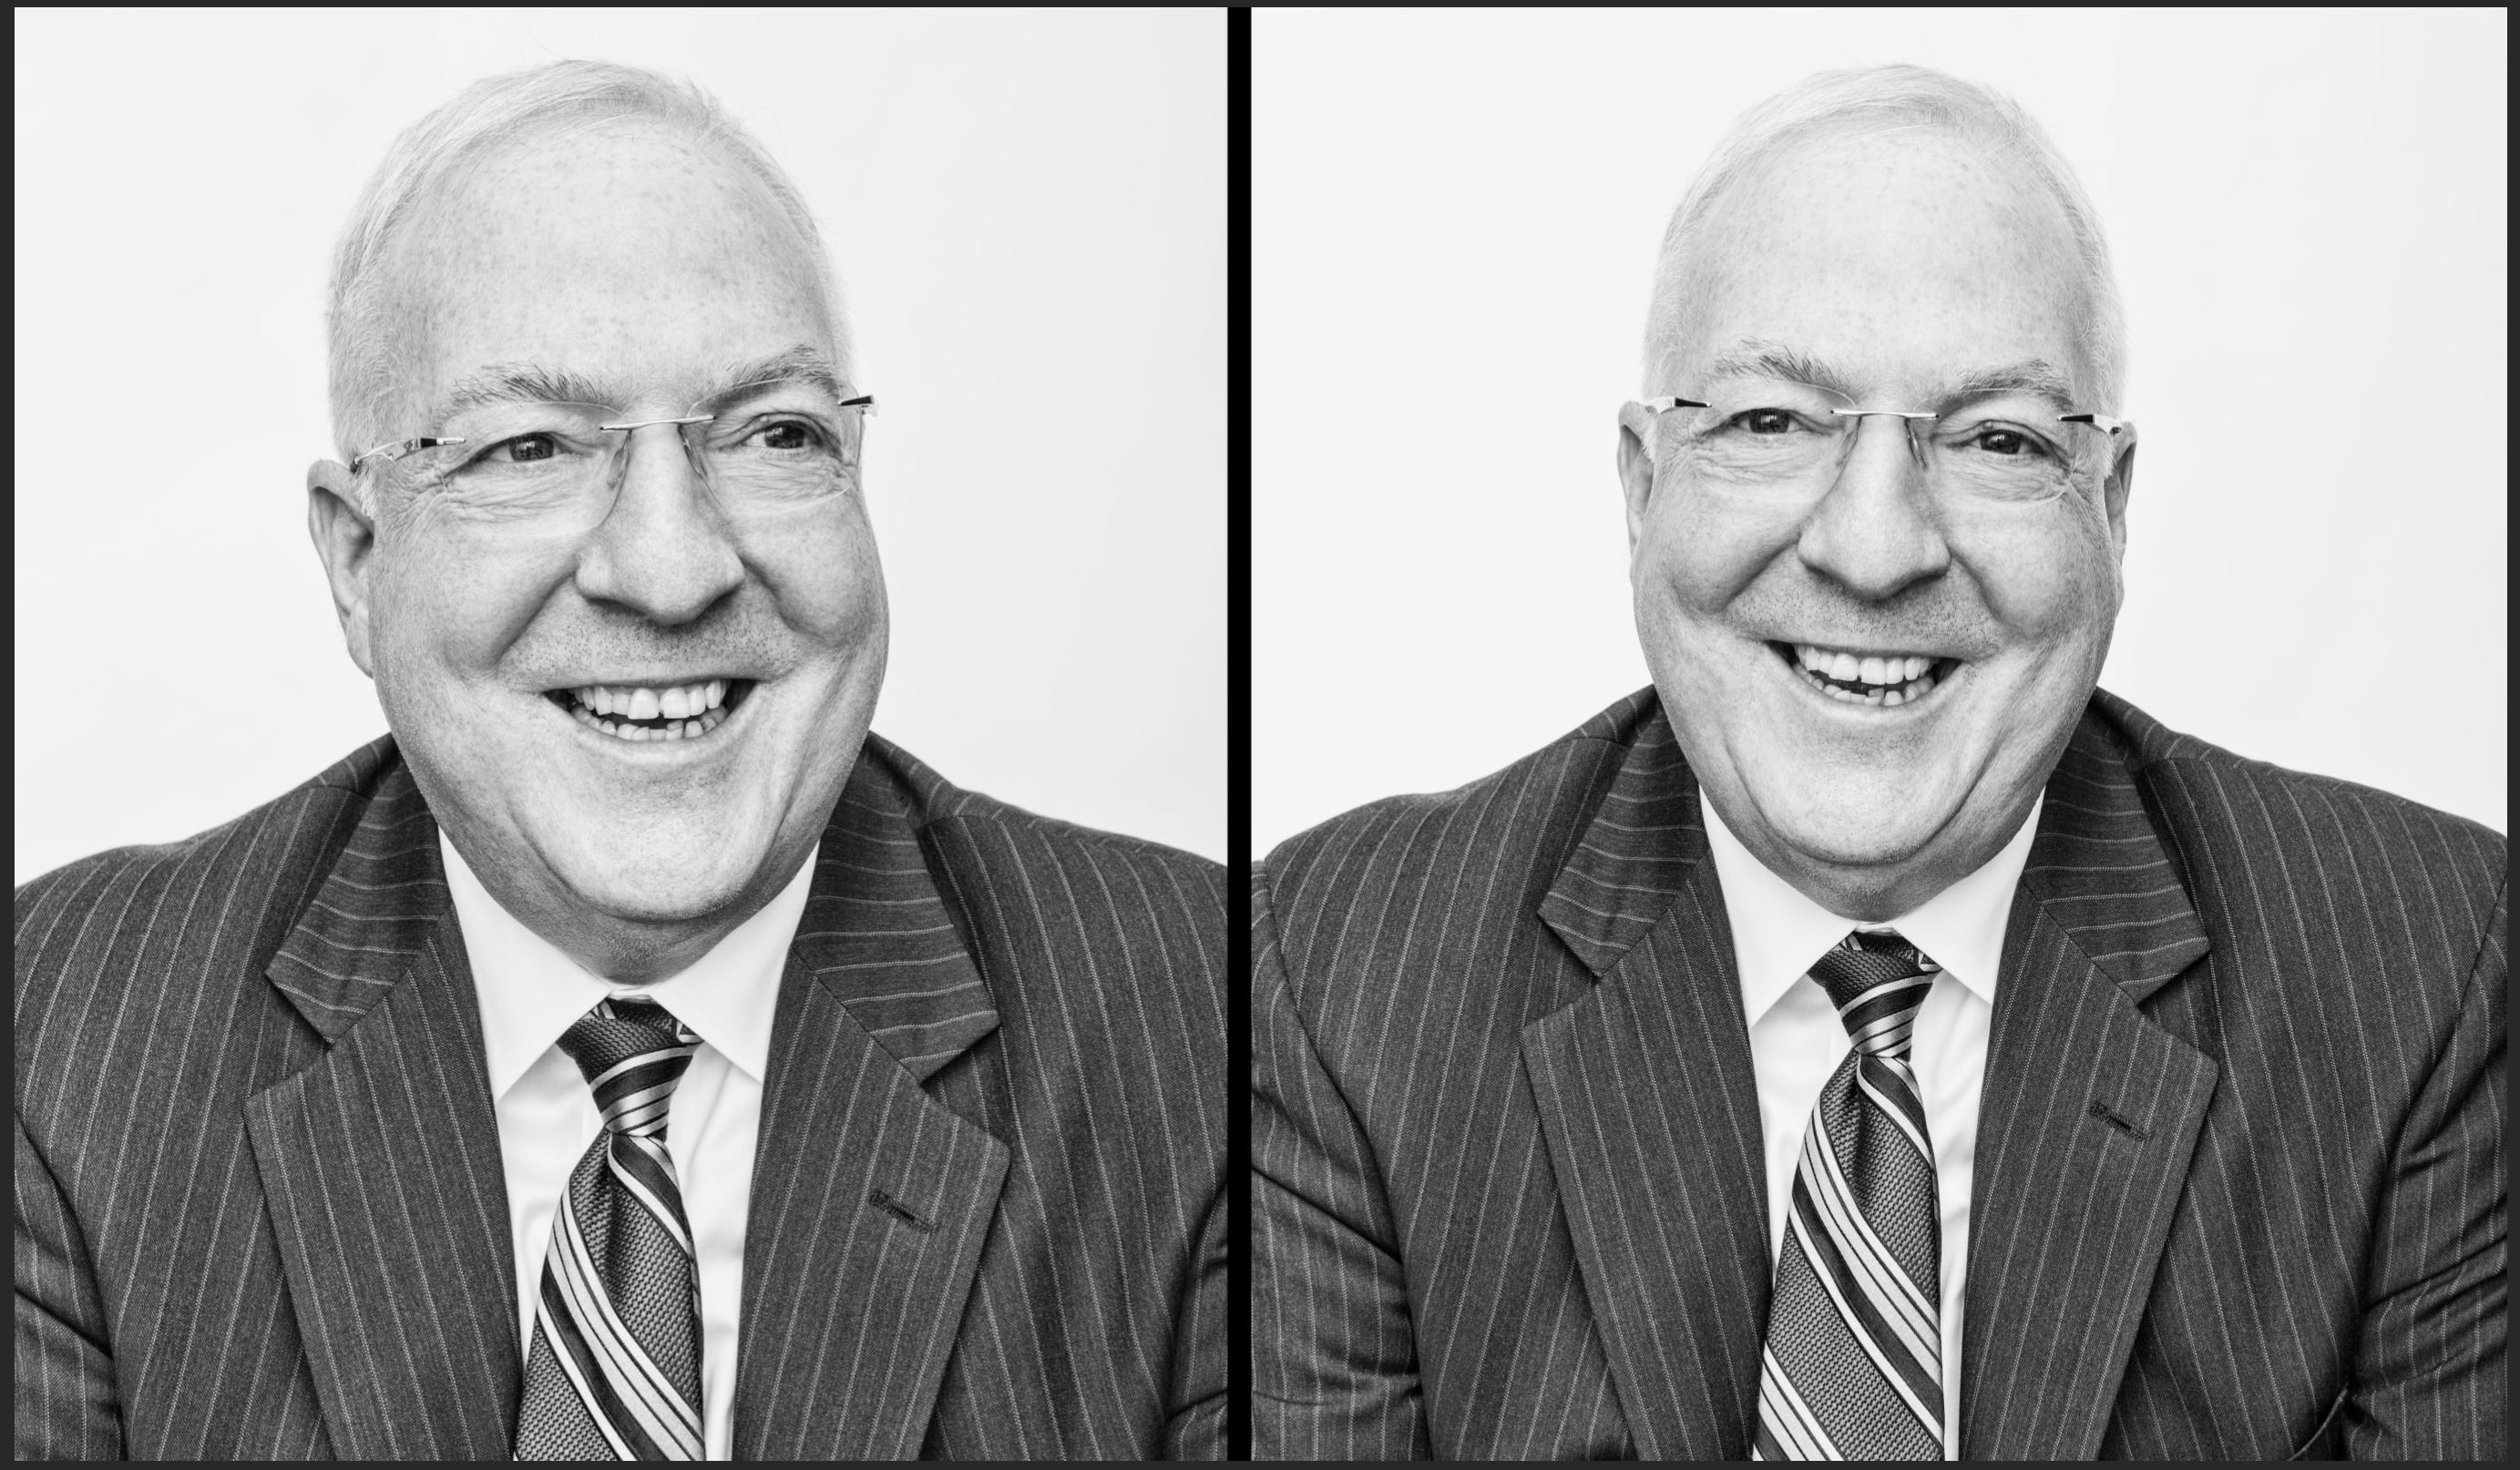 Dr. Ken Cowan, MD, PhD for the Nebraska Luminary portrait series by Scott Dobry Pictures photographer in Omaha, Nebraska